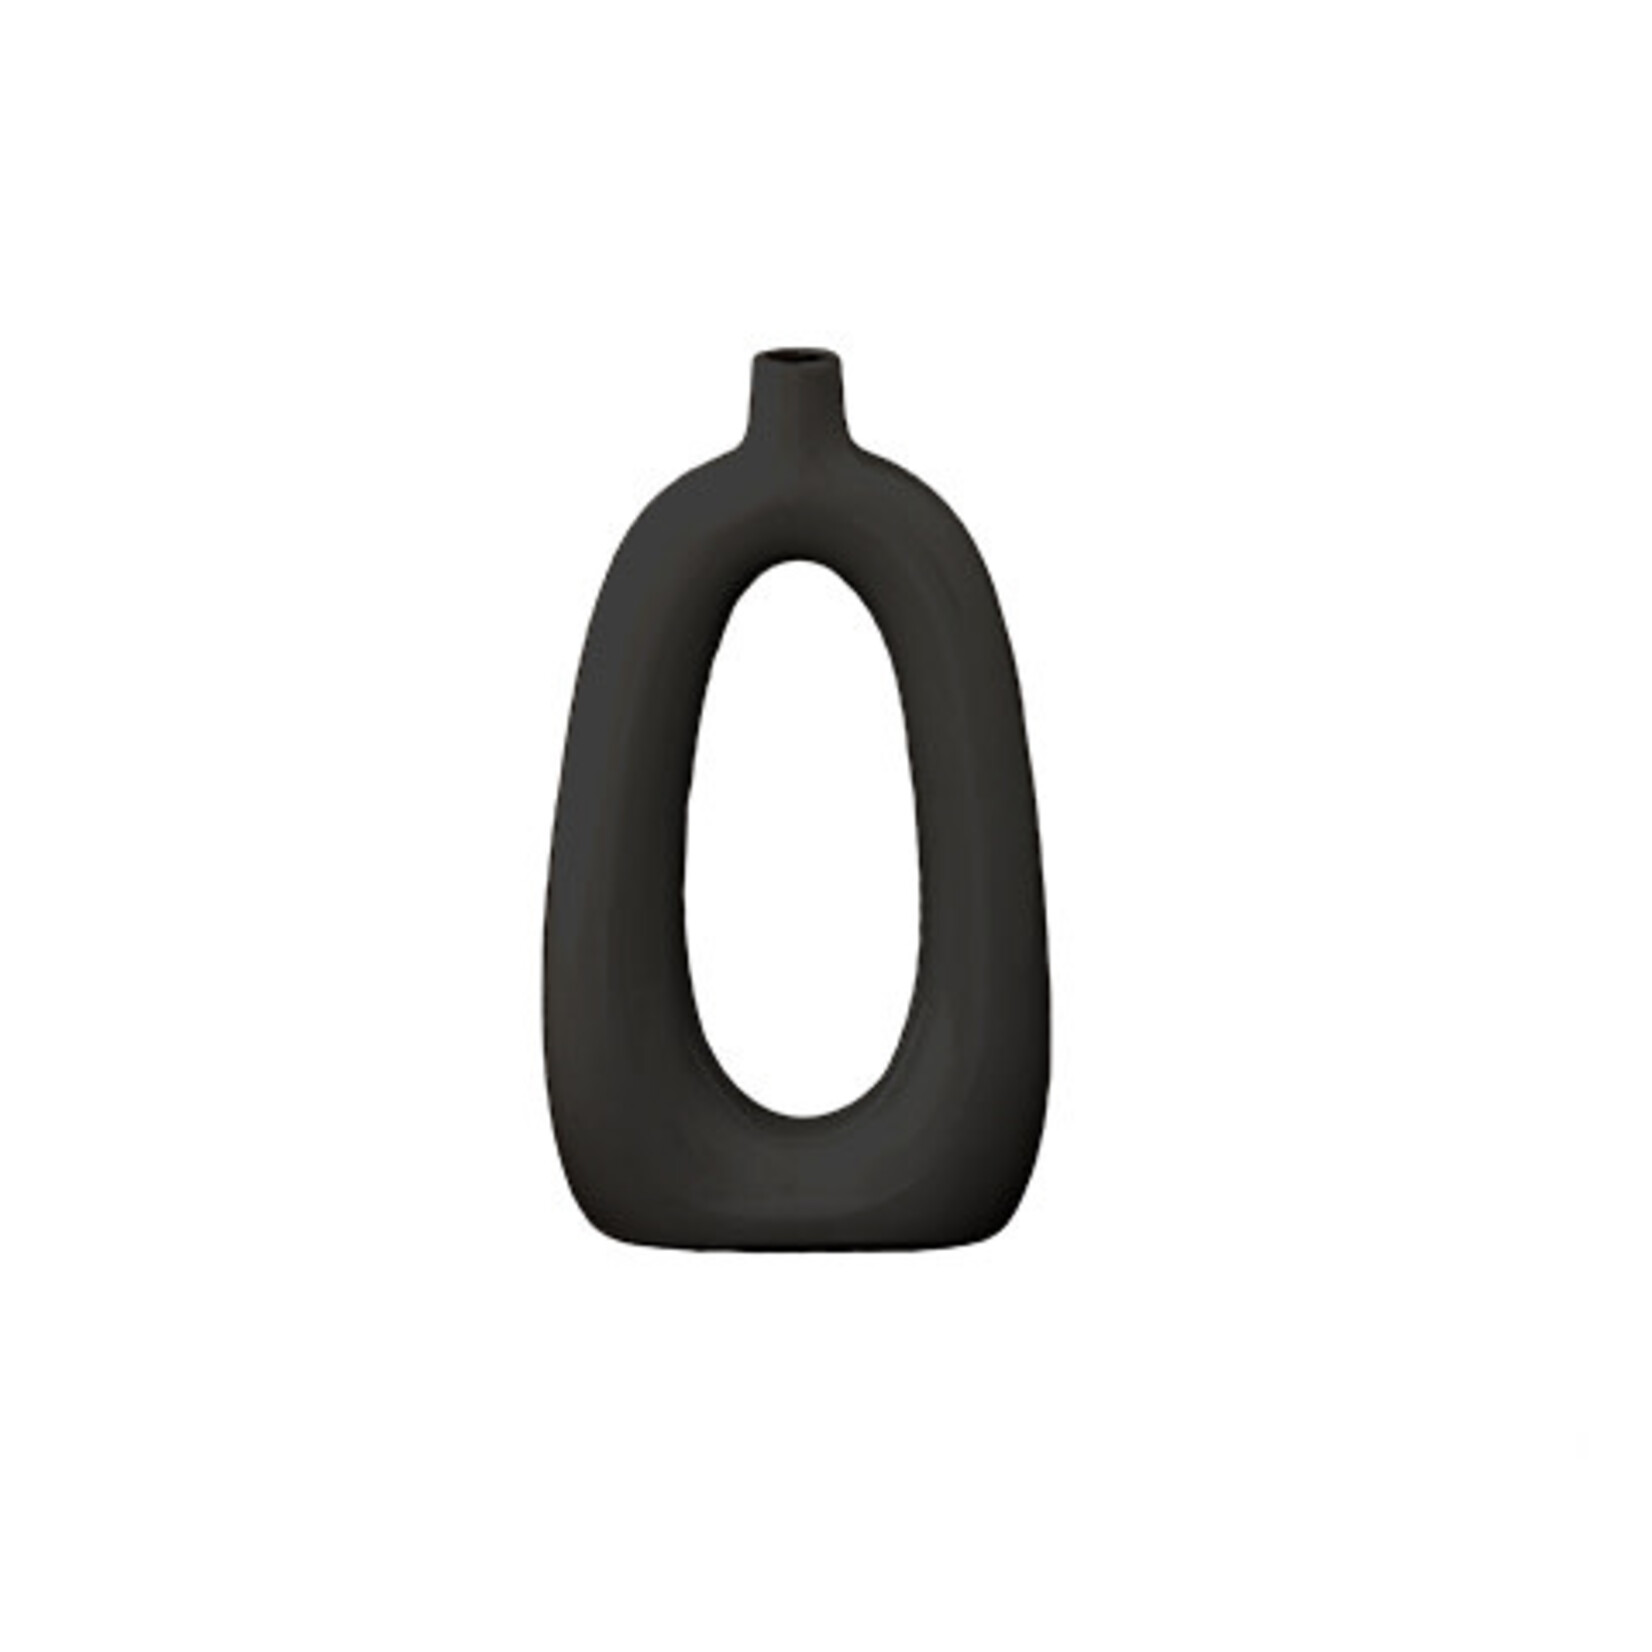 8”H X 4.25” MATTE BLACK CERAMIC OVAL RING BUDVASE